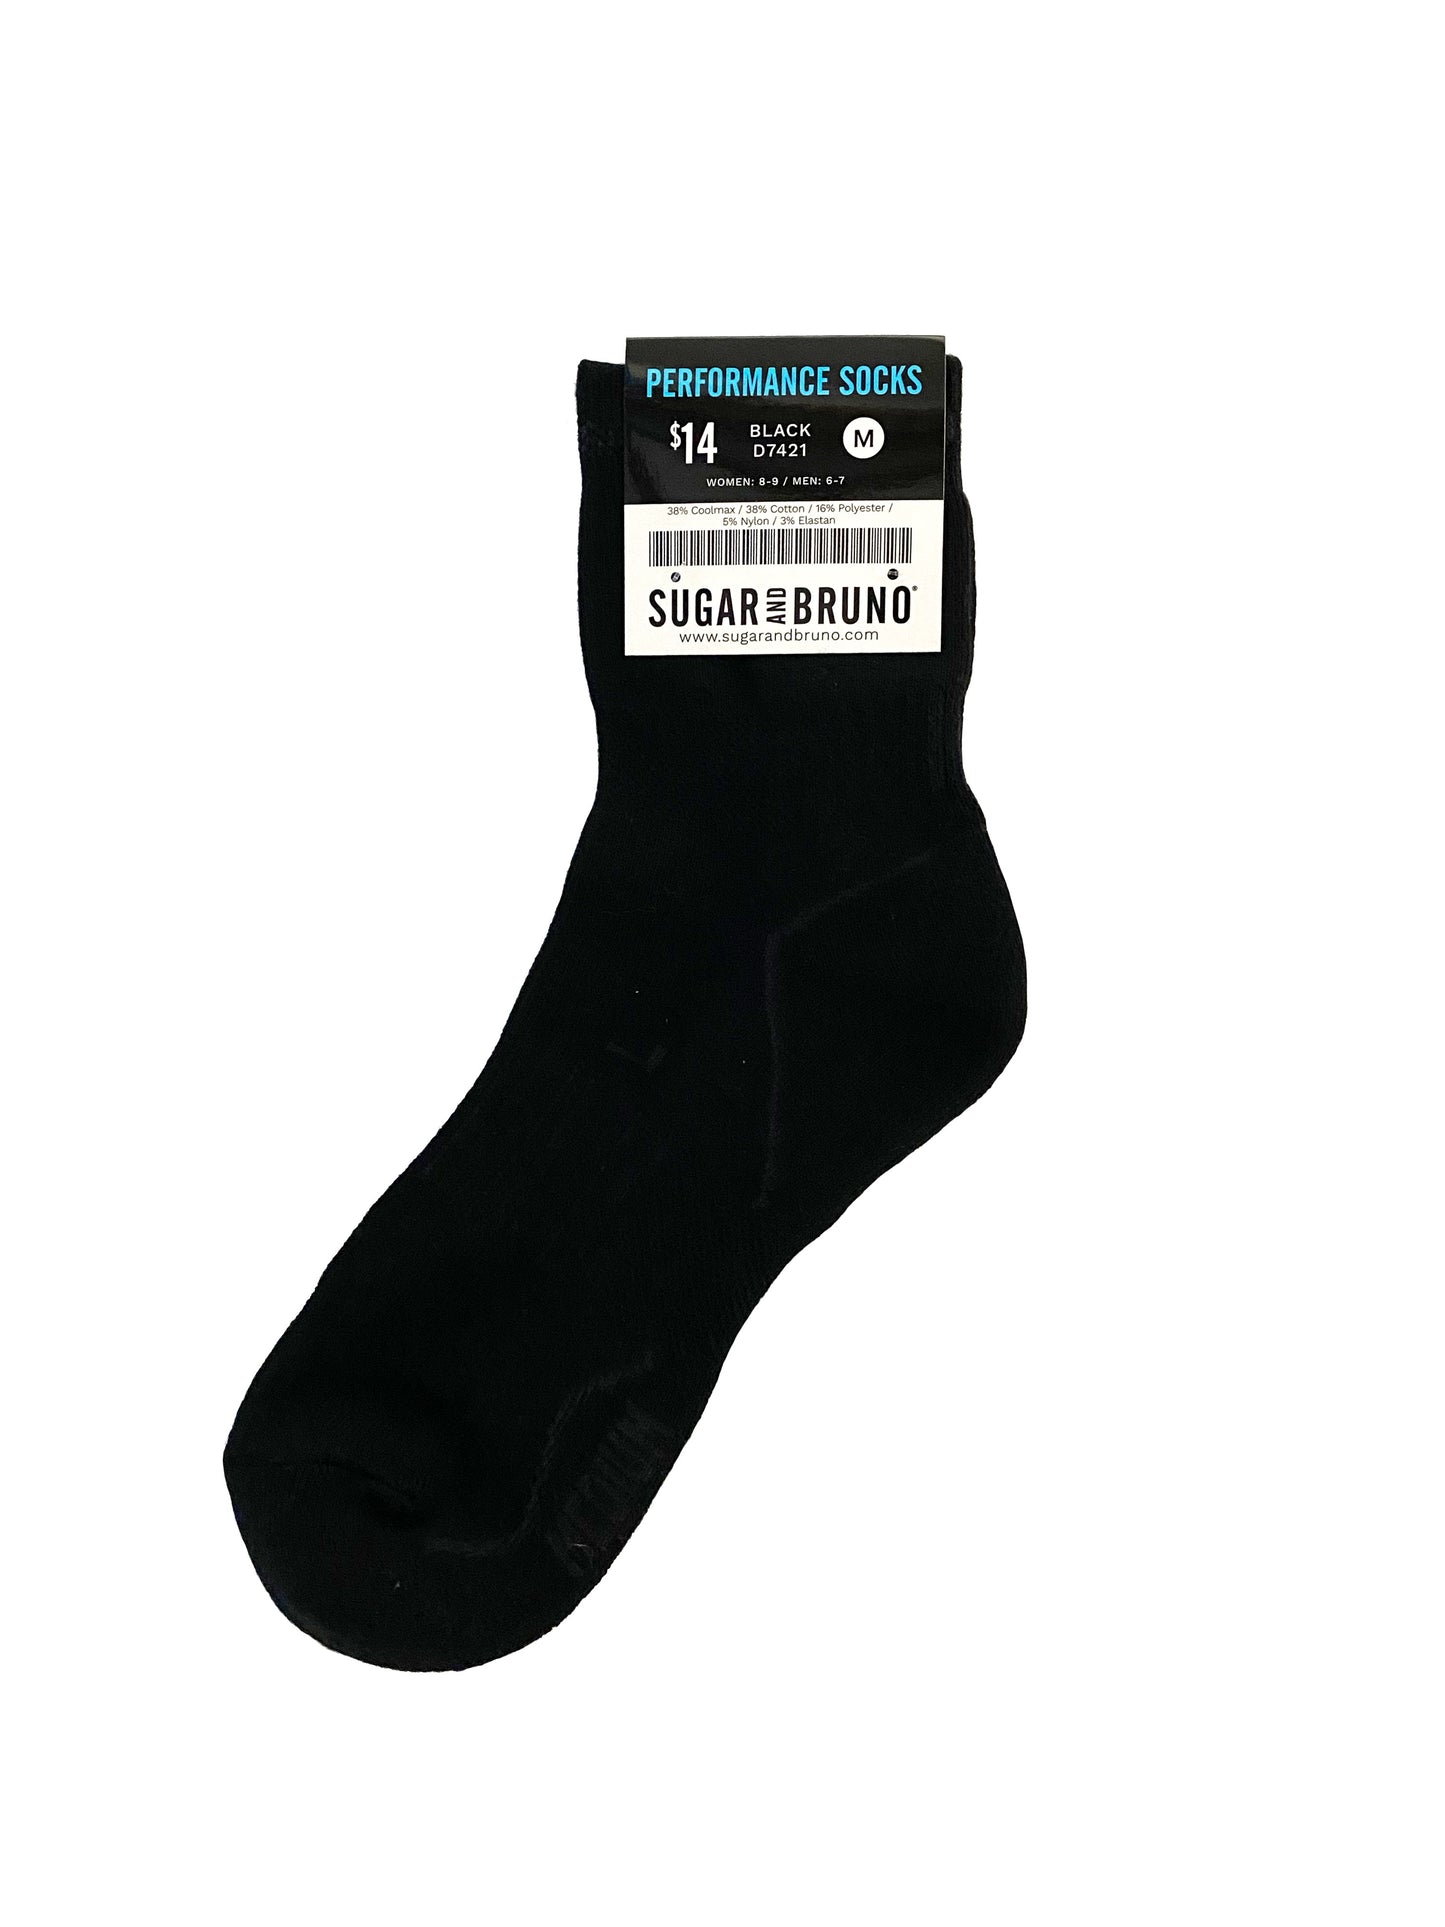 SB Performance Socks, Black